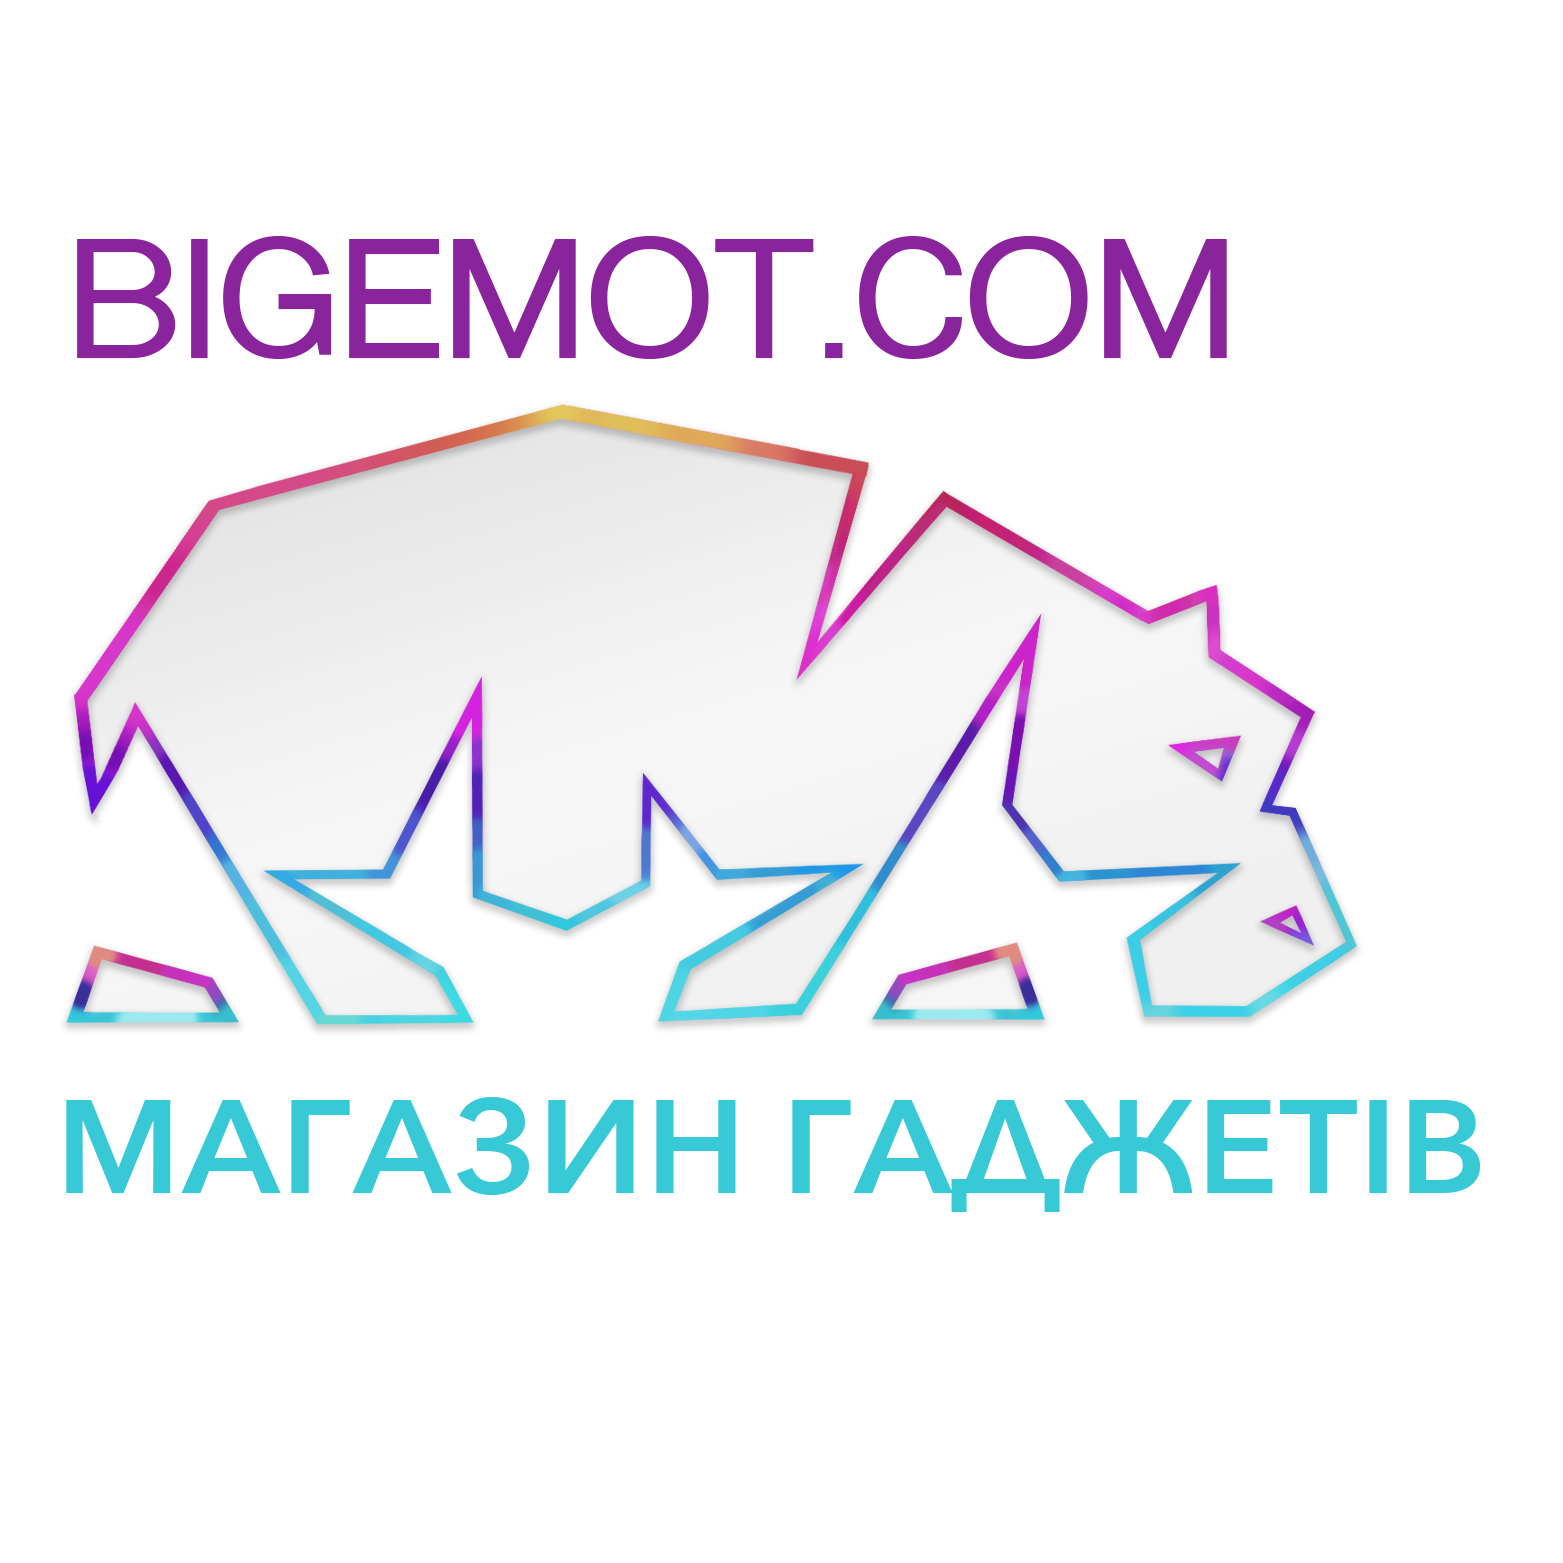 bigemot.com/